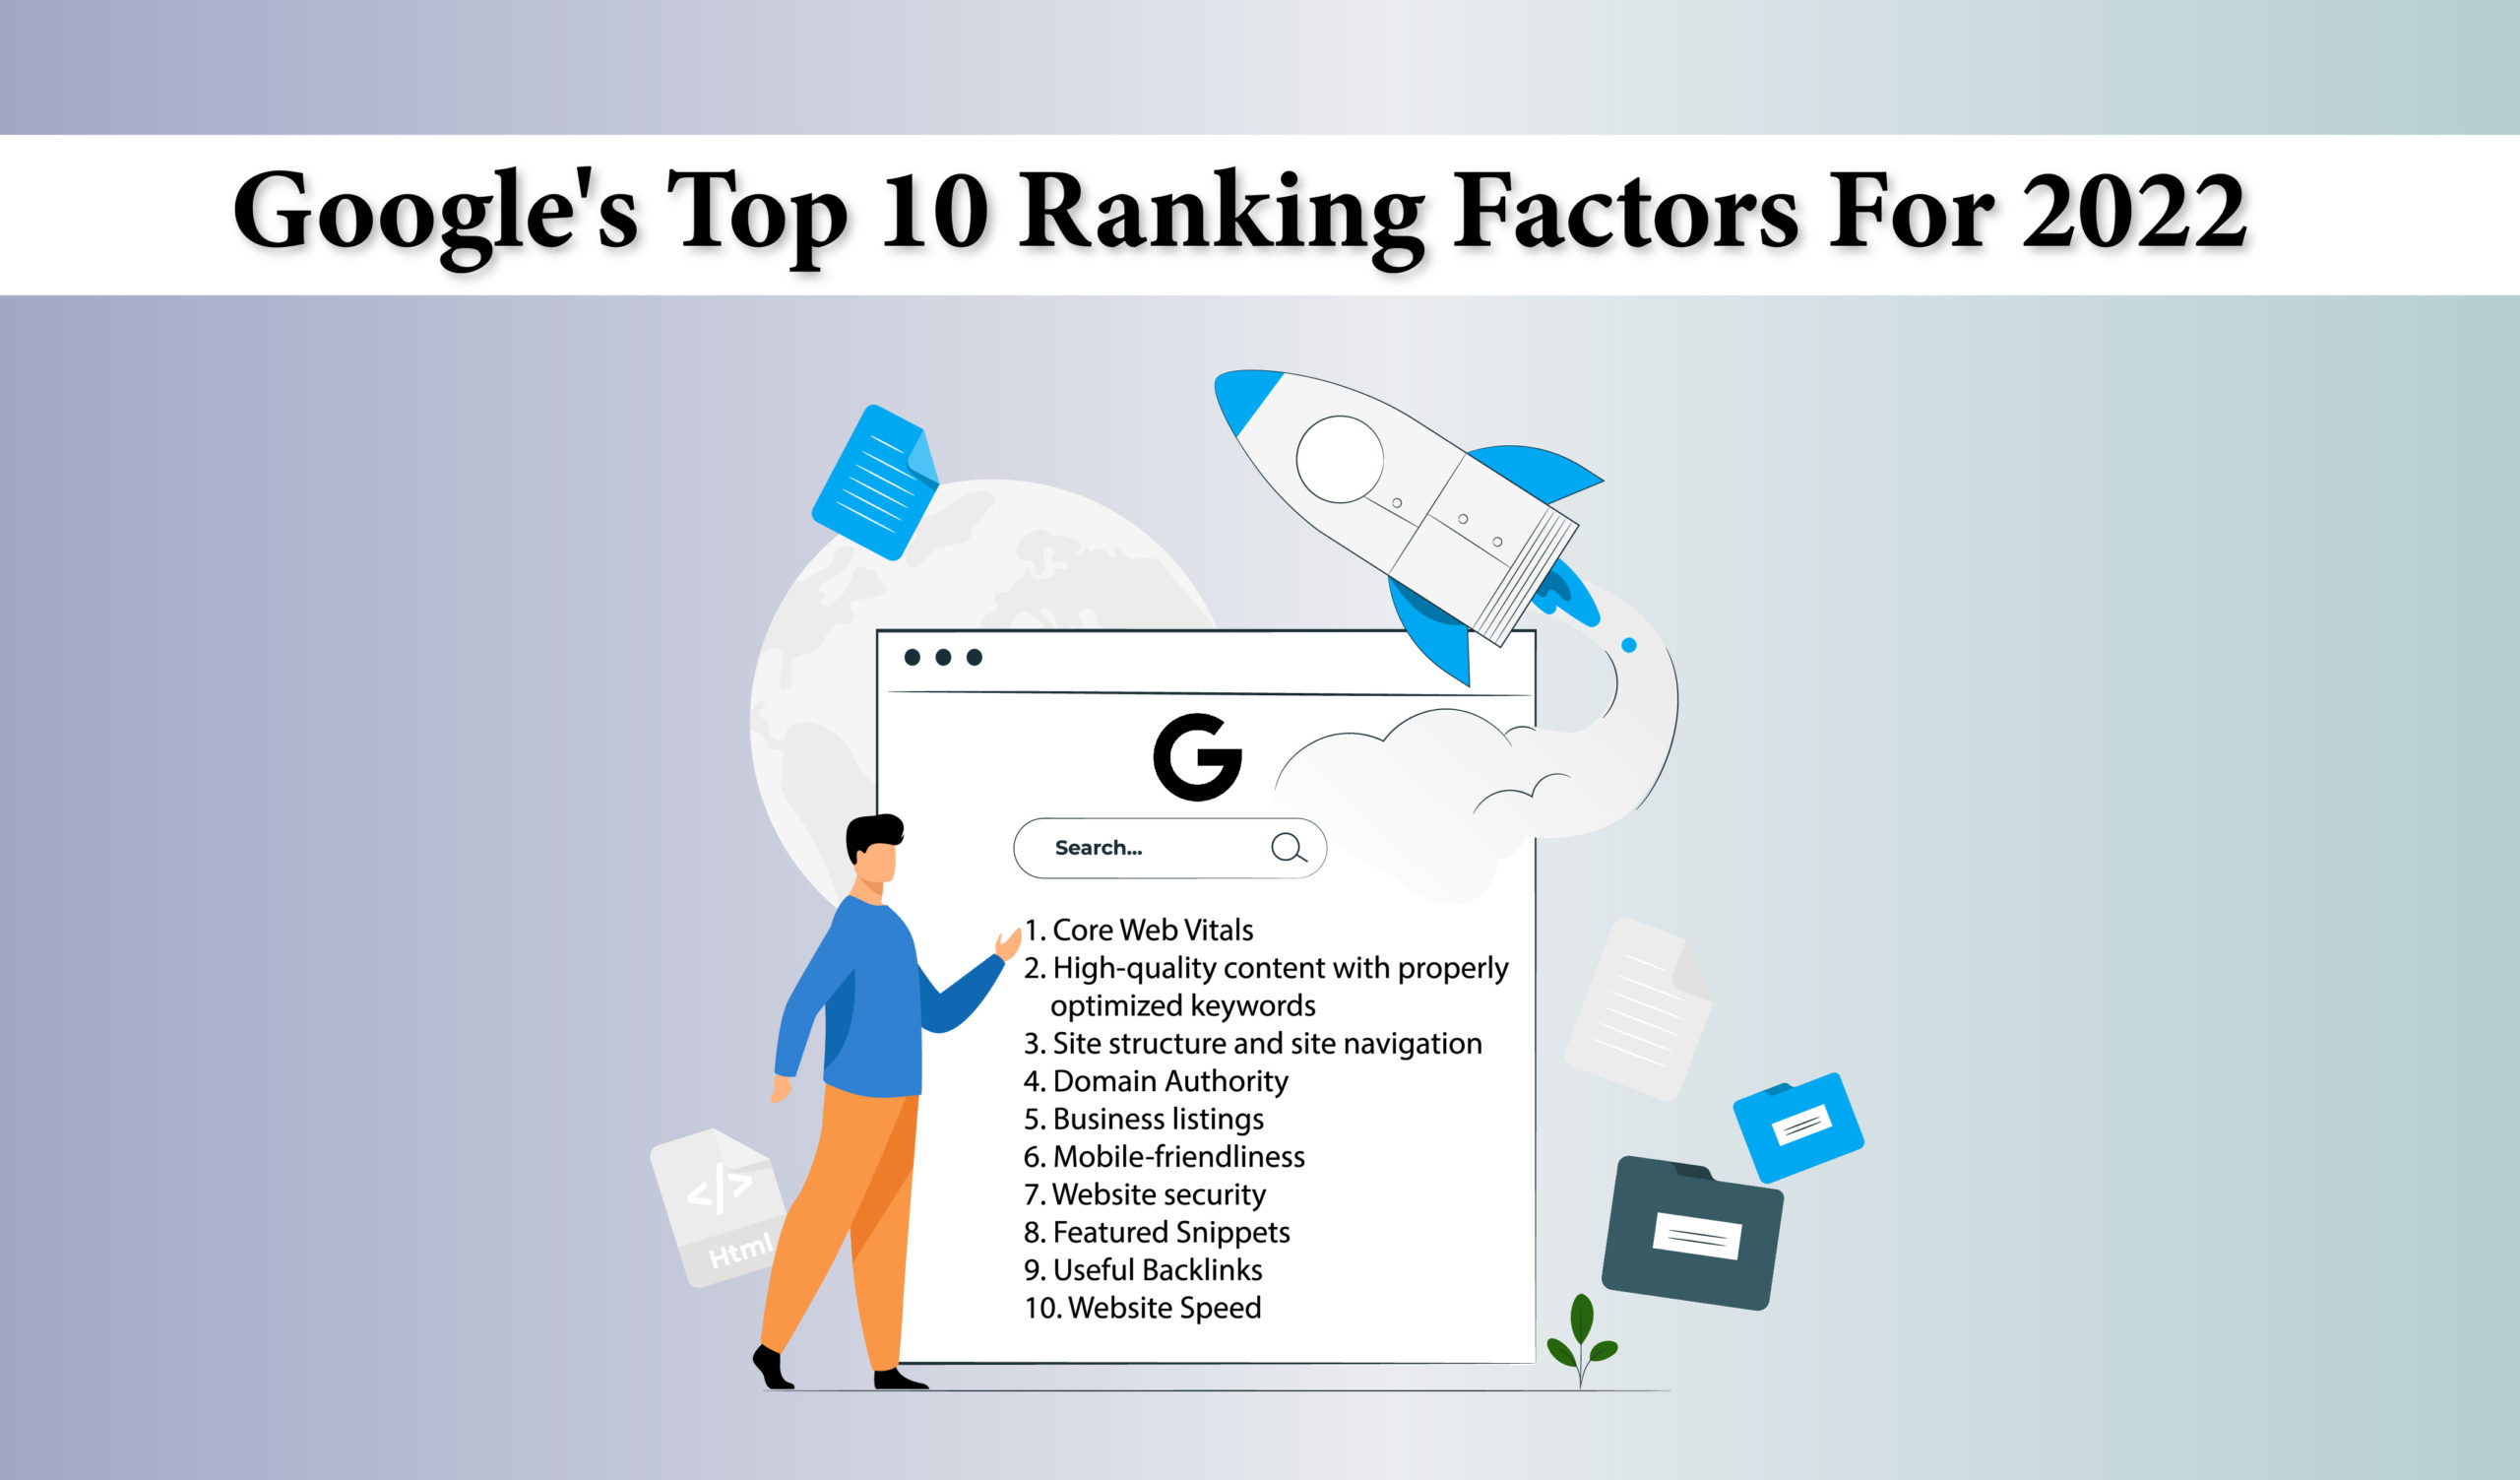 Google’s Top 10 Ranking Factors for 2022